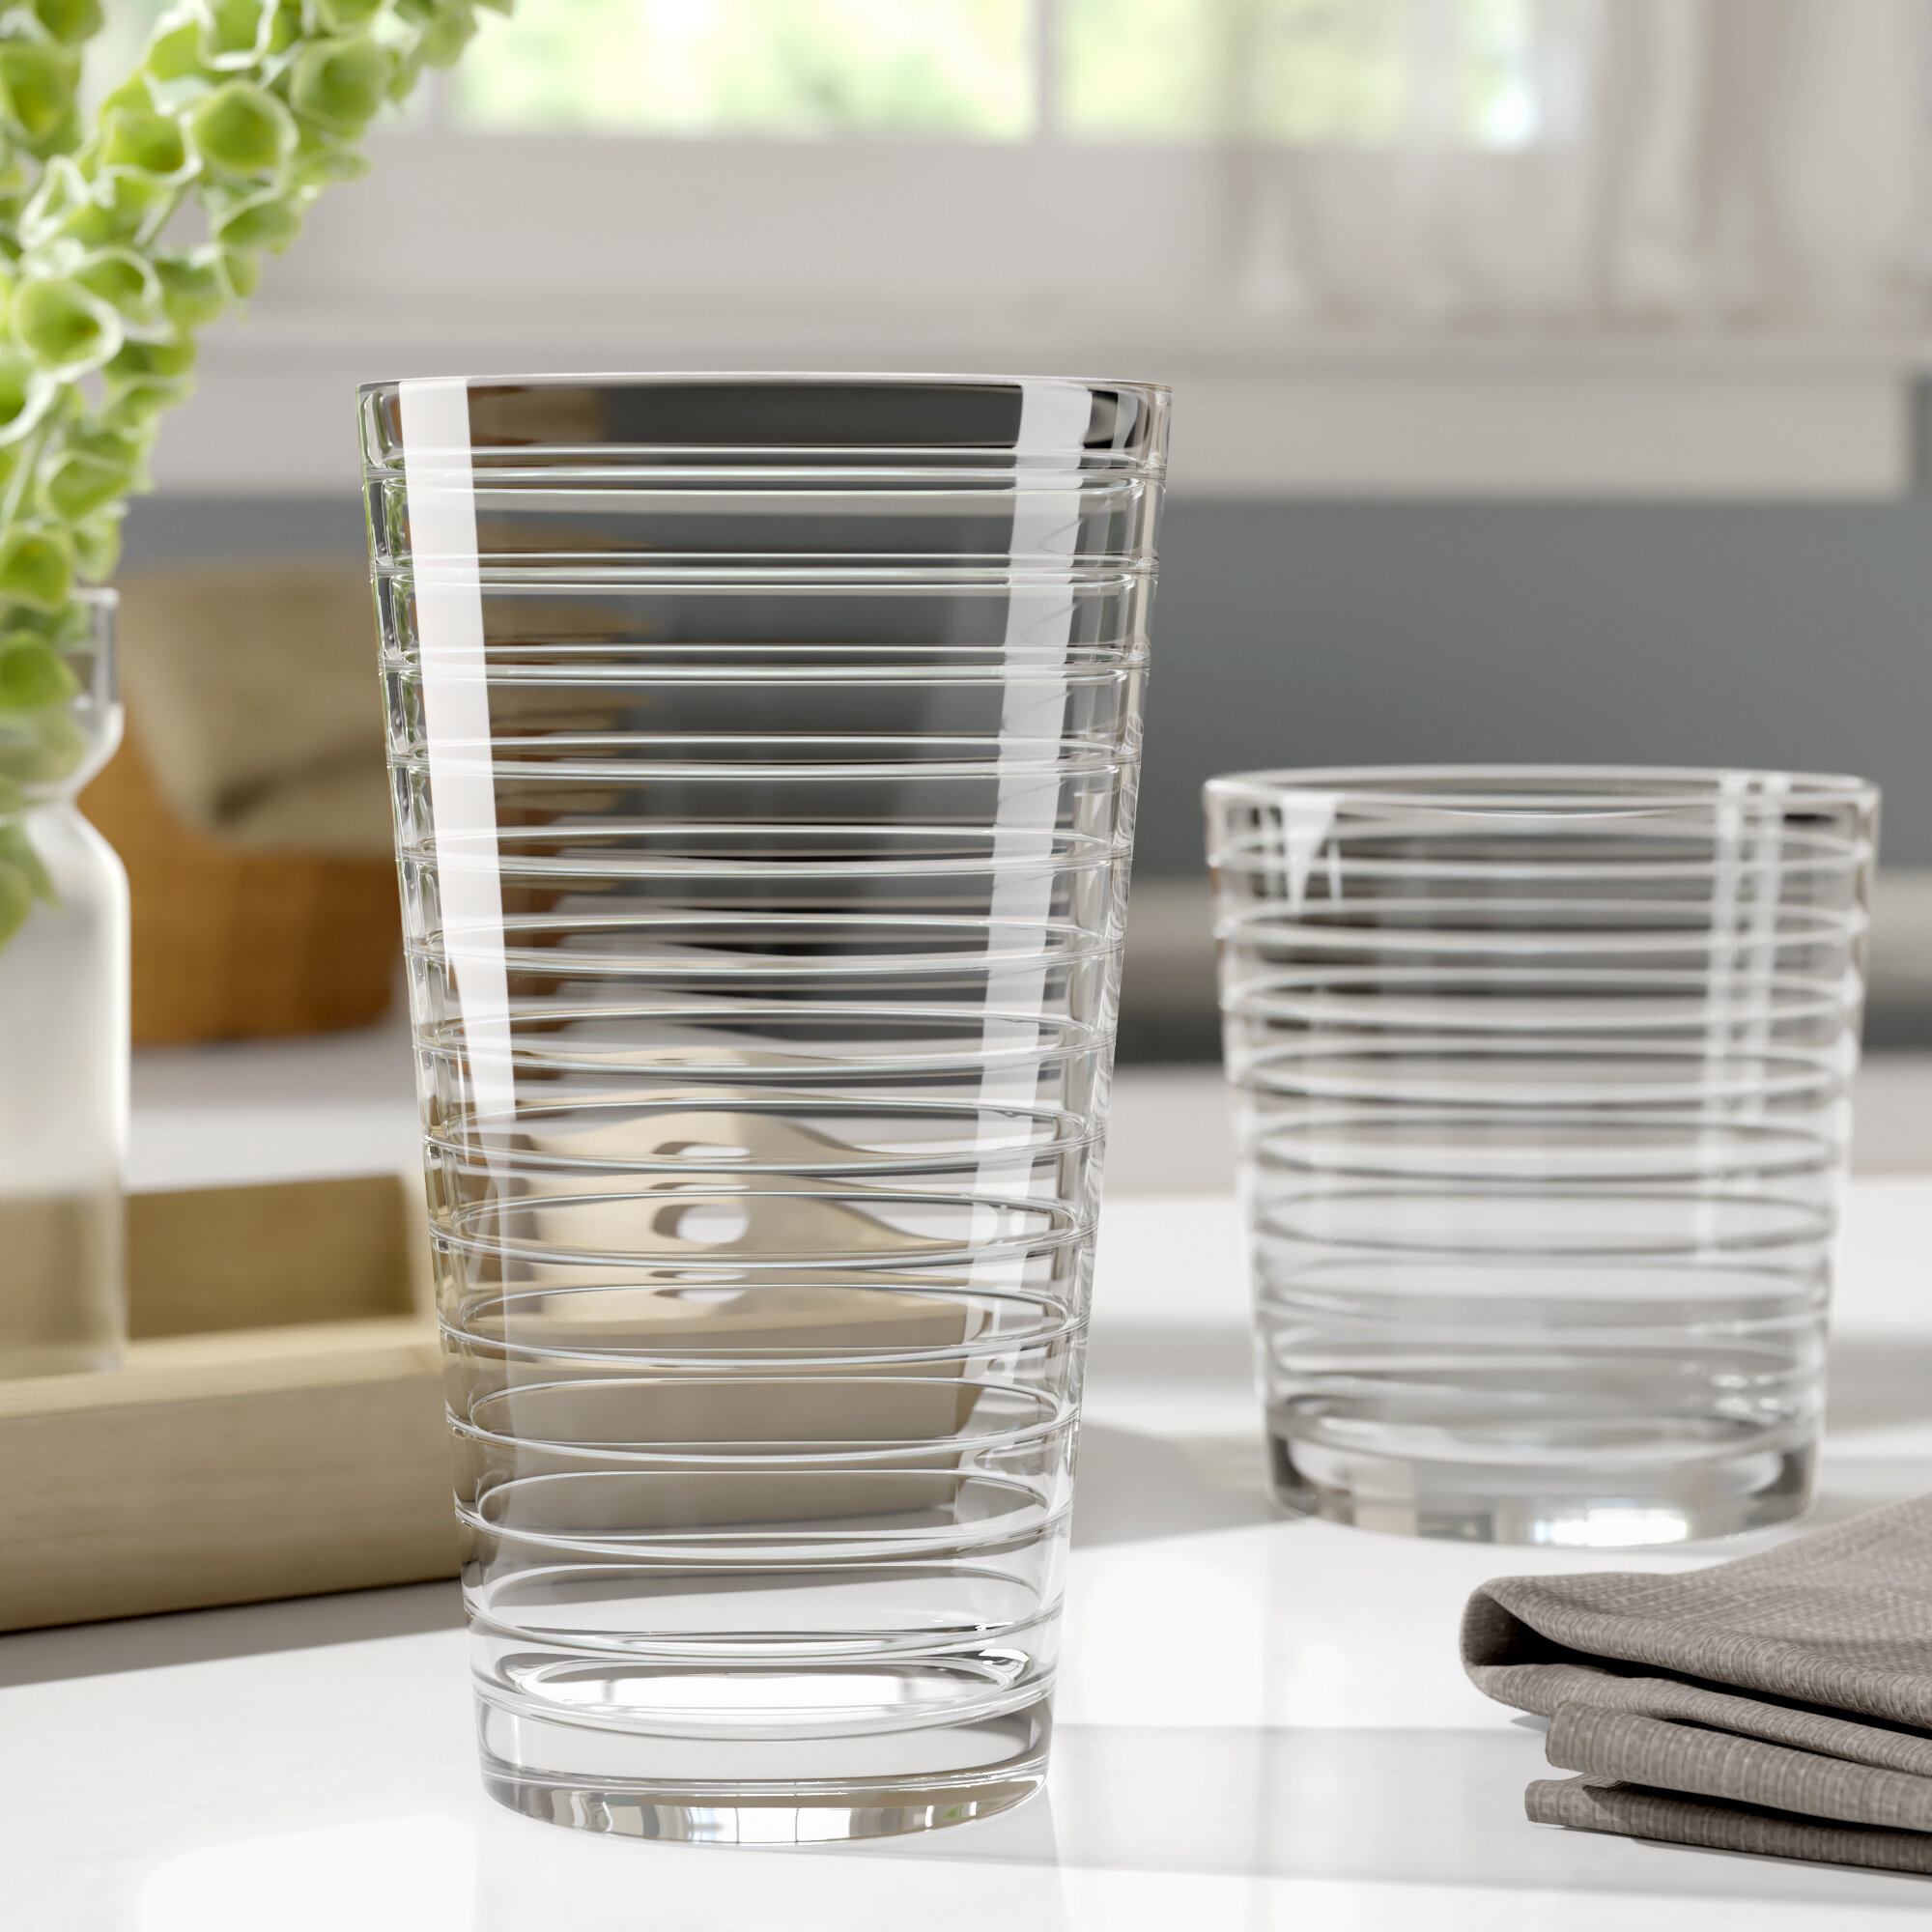 Libbey Orbita Tumbler & Rocks Assorted Glassware Set Choose the desired set